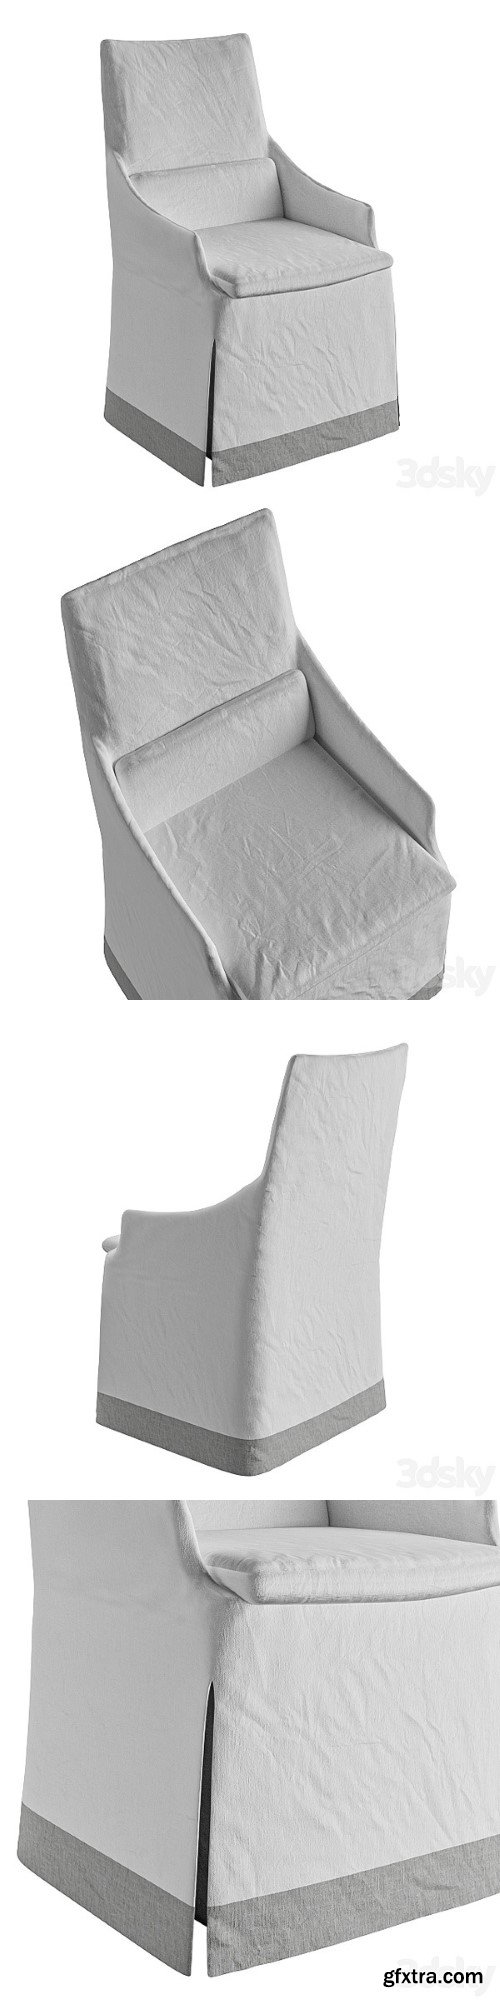 Slip Cover Chair | Vray+Corona